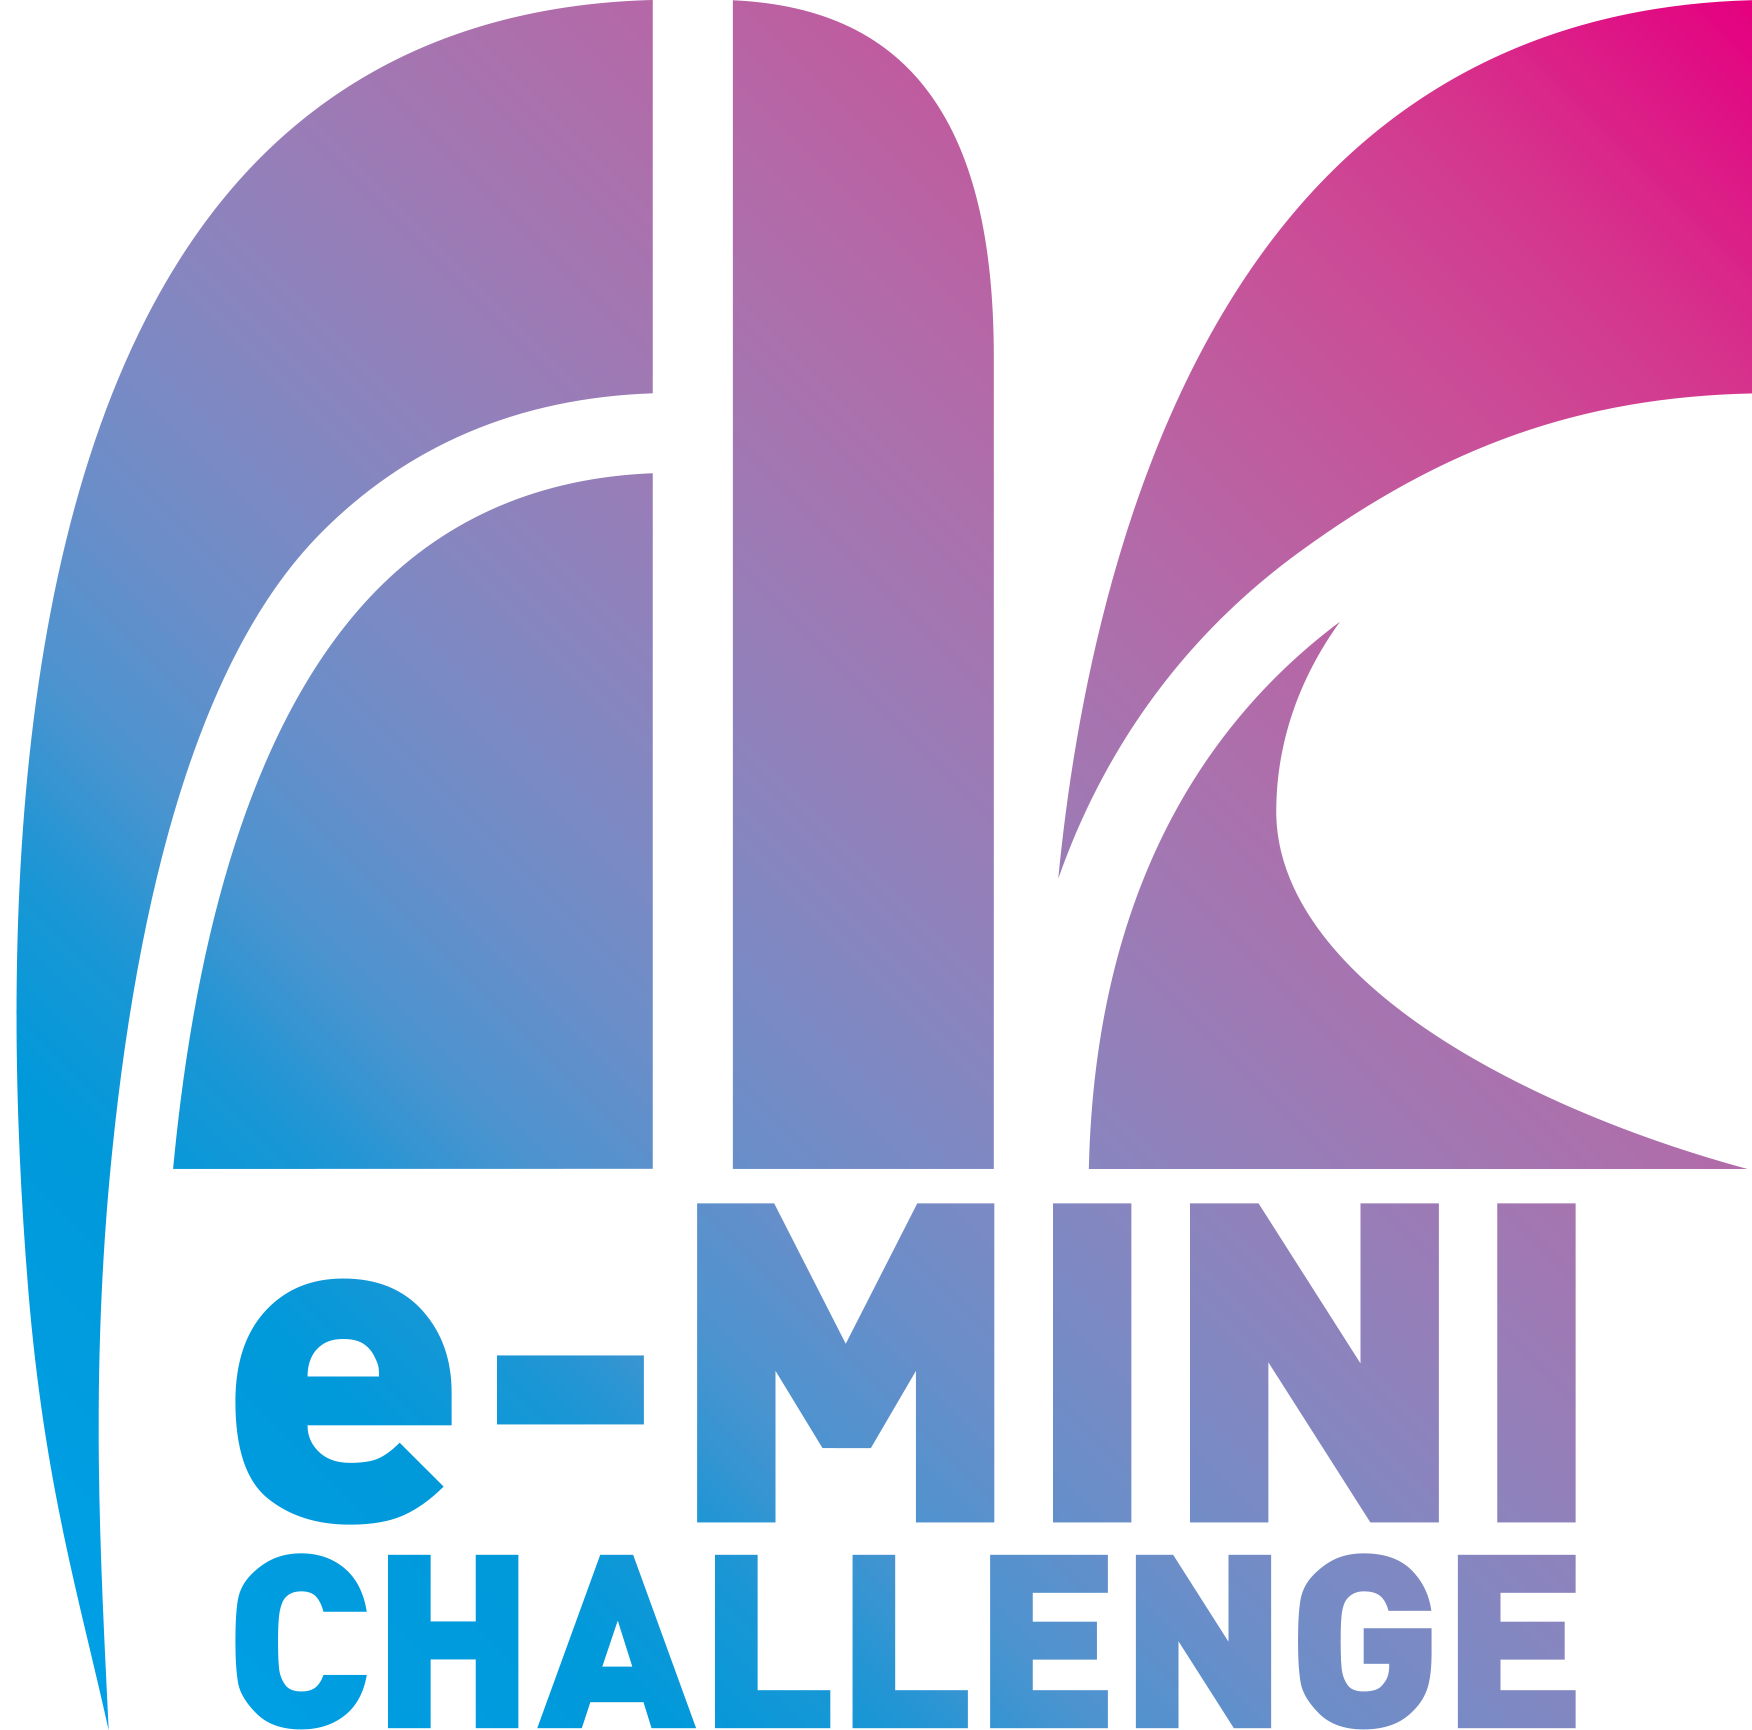 e-MINI CHALLENGE®2022 S2 Rd.5 ポイントランキング公開